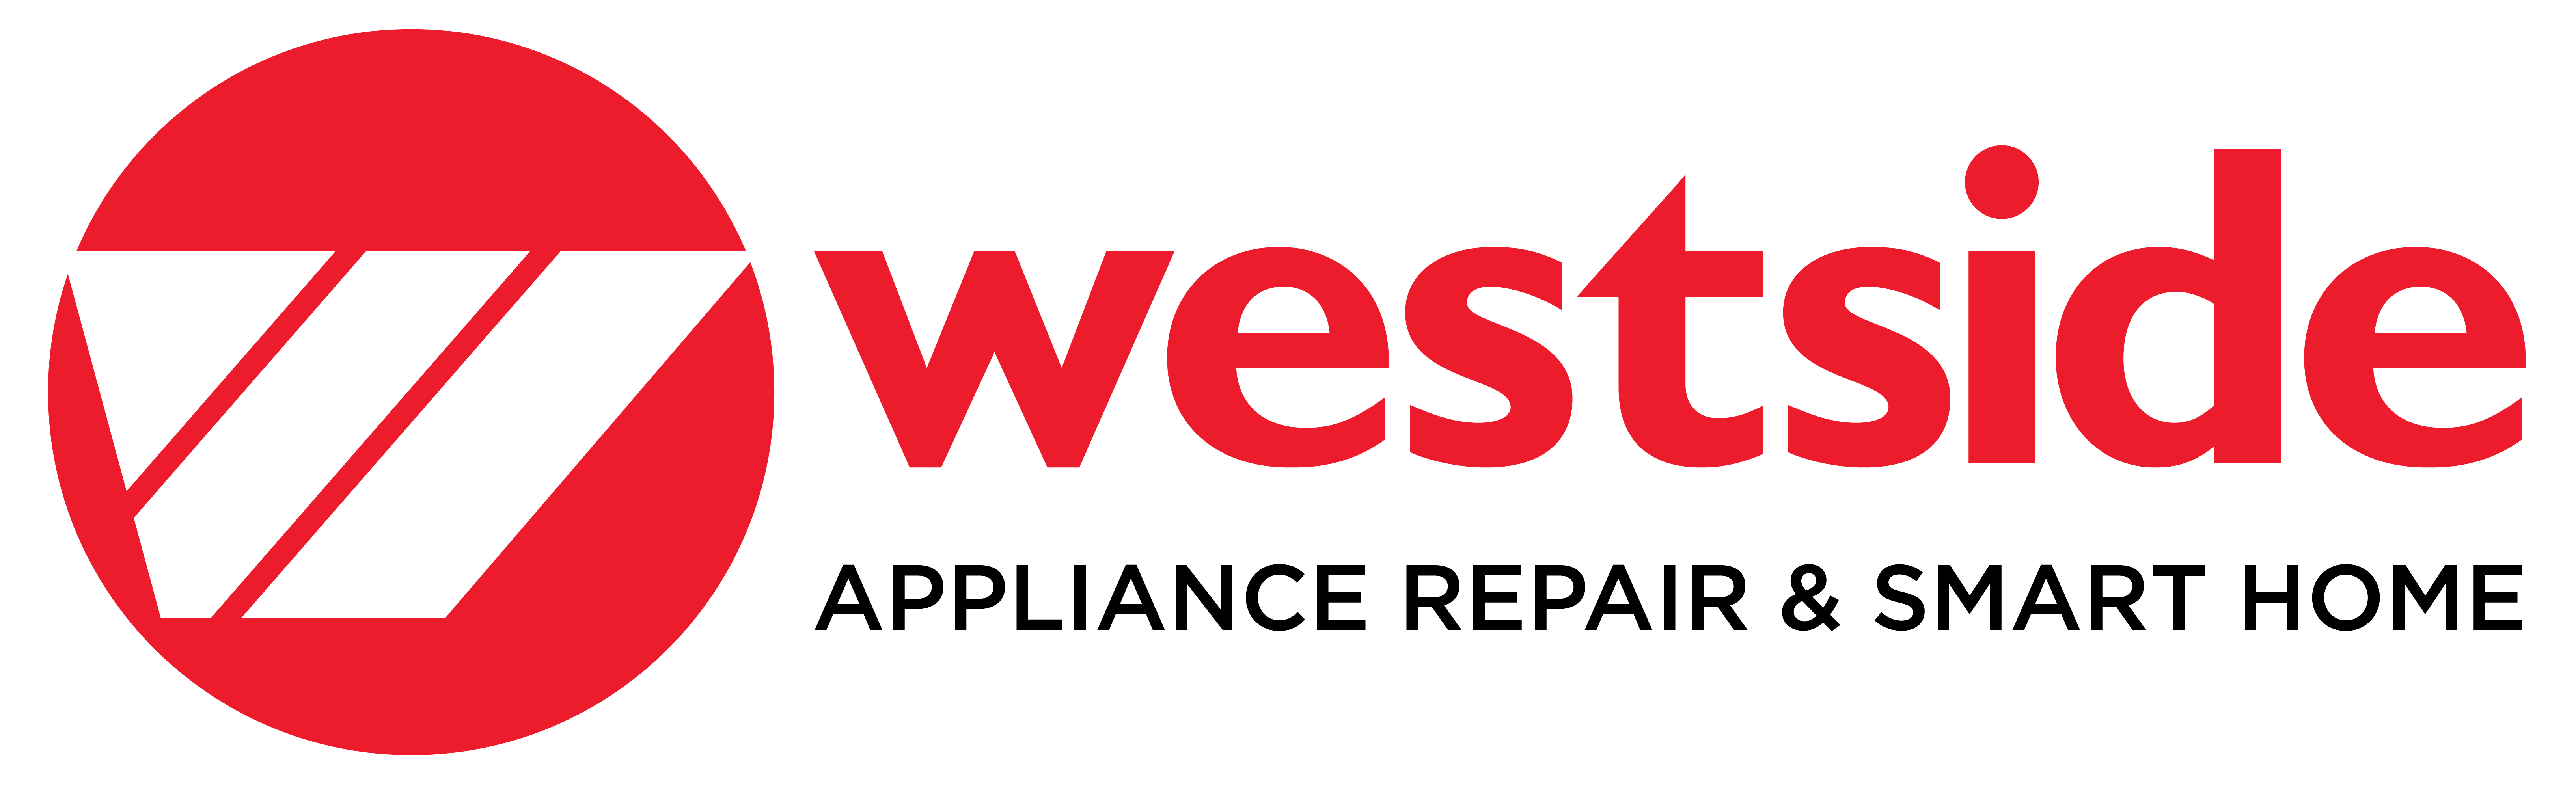 Maytag Company Logo - Home Appliance Repair